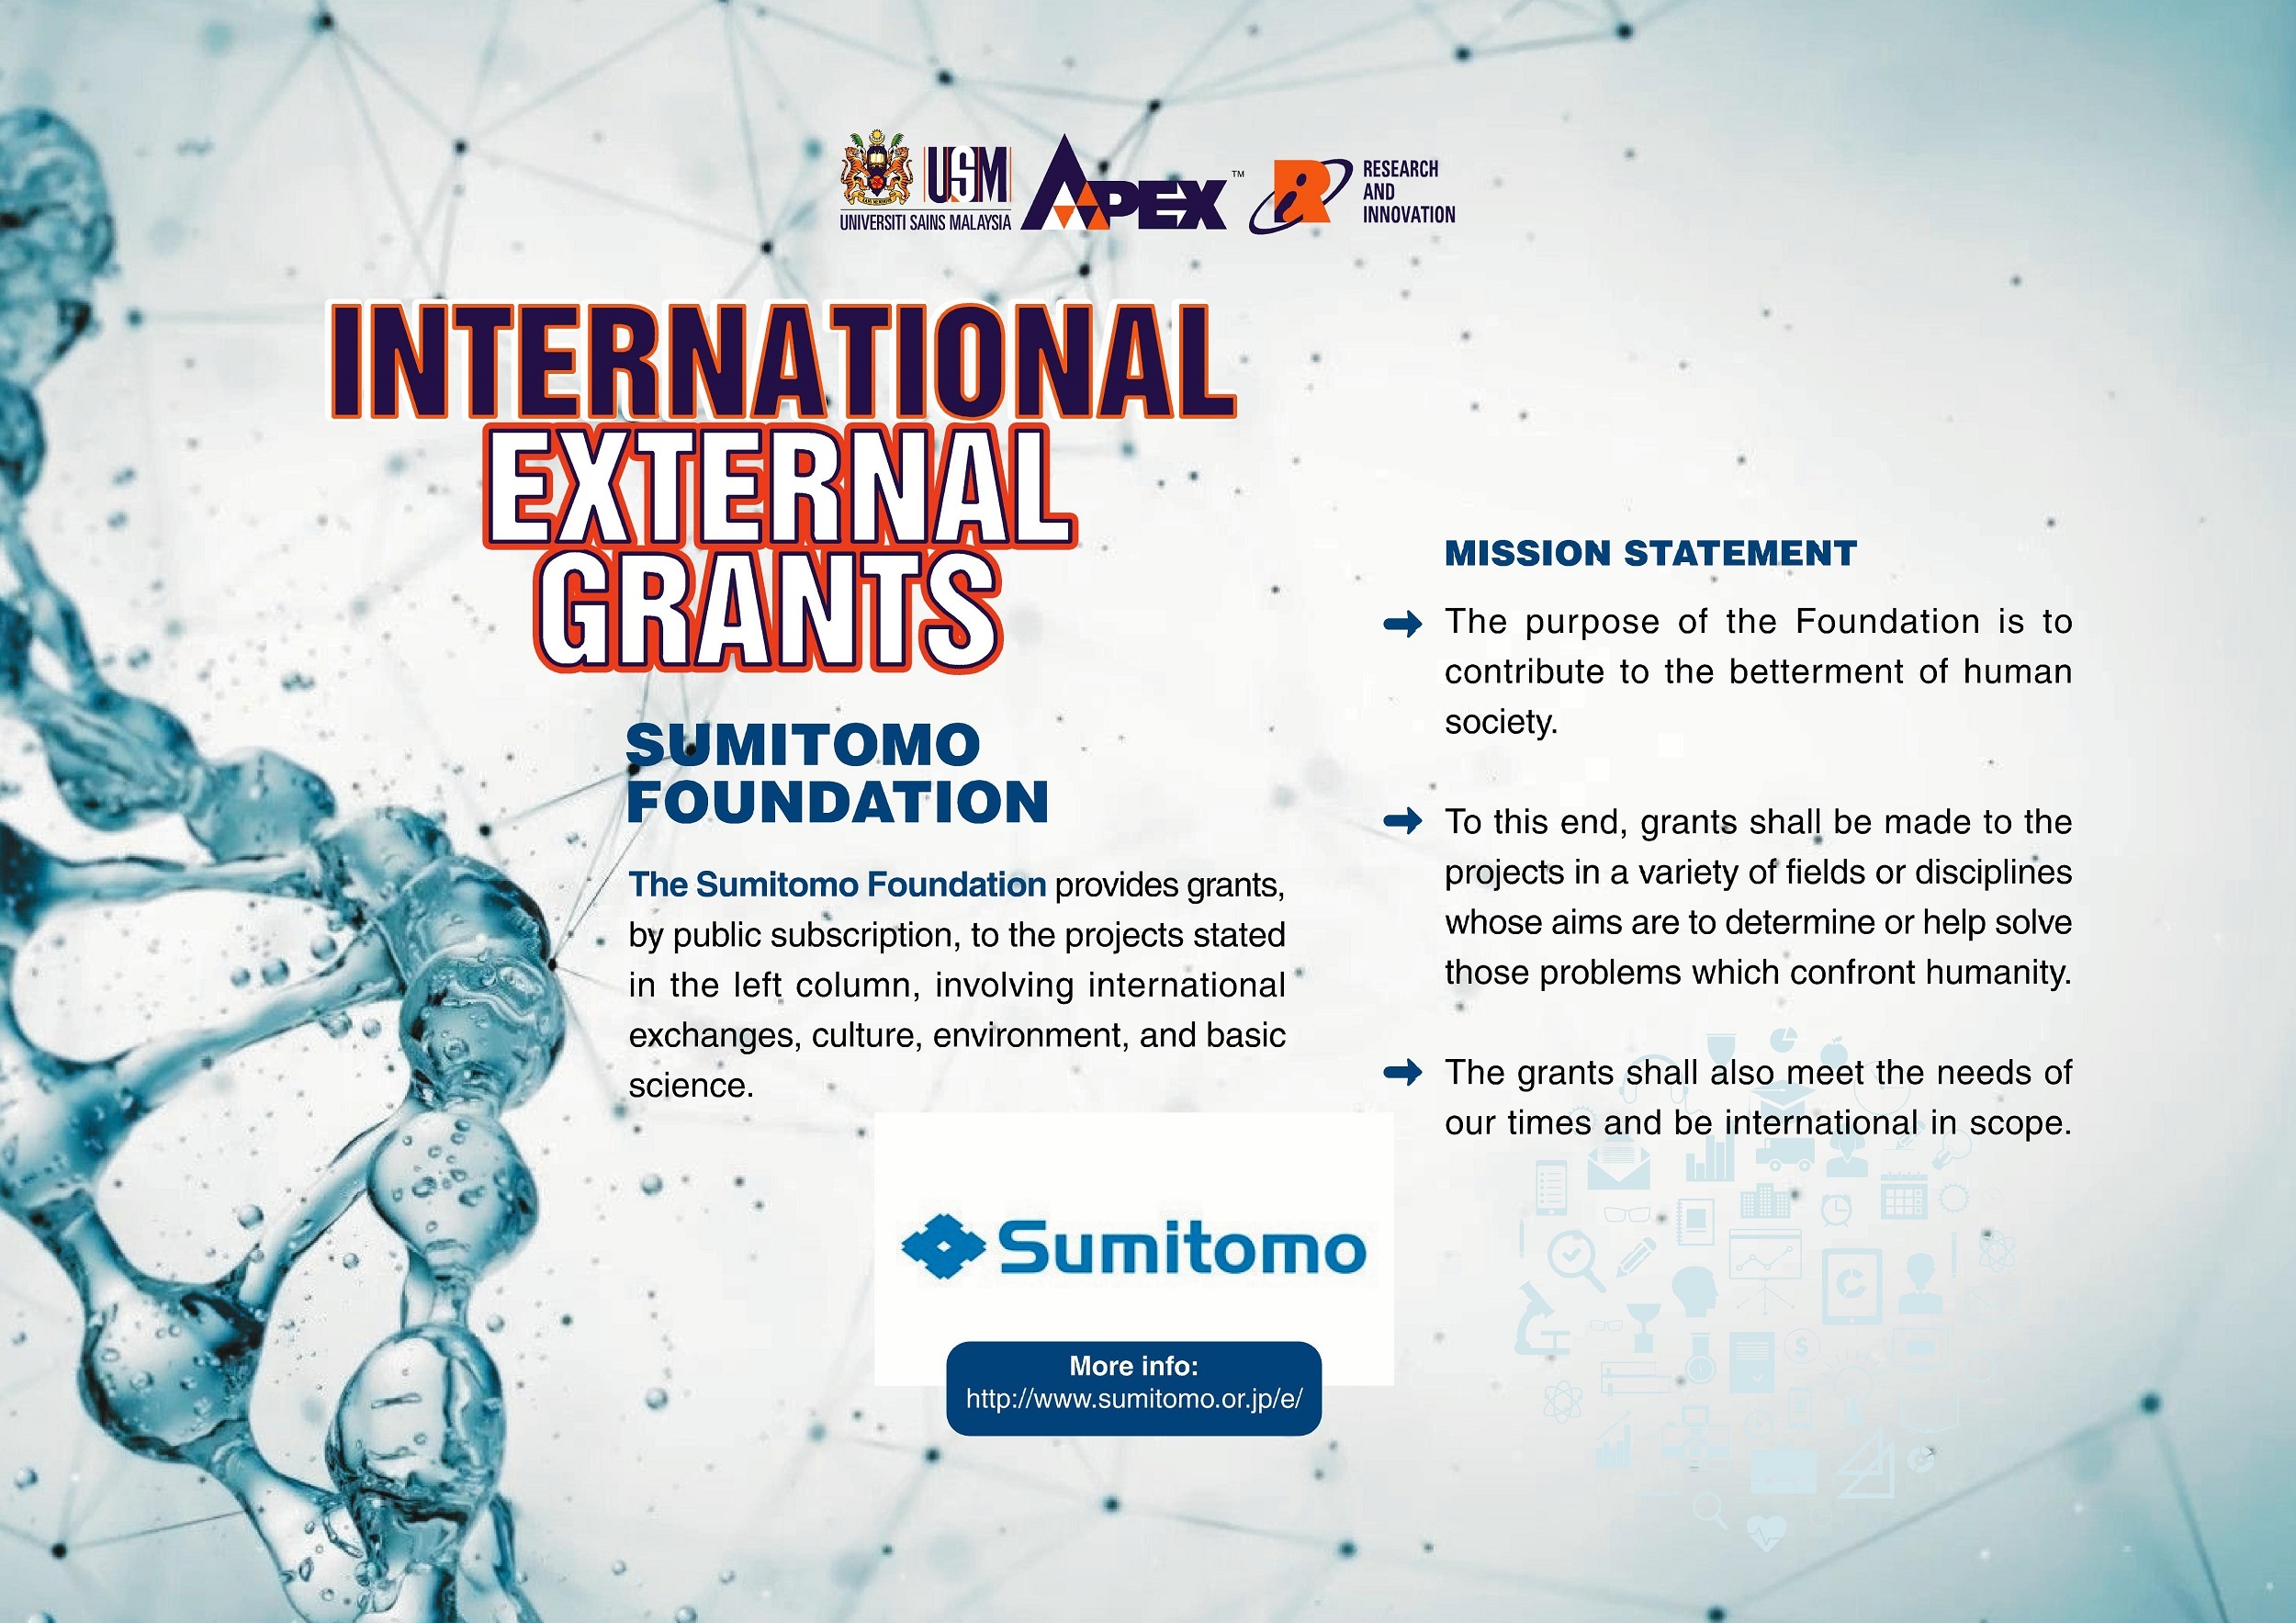 Poster External Grants International SUMITOMO FOUNDATION edited